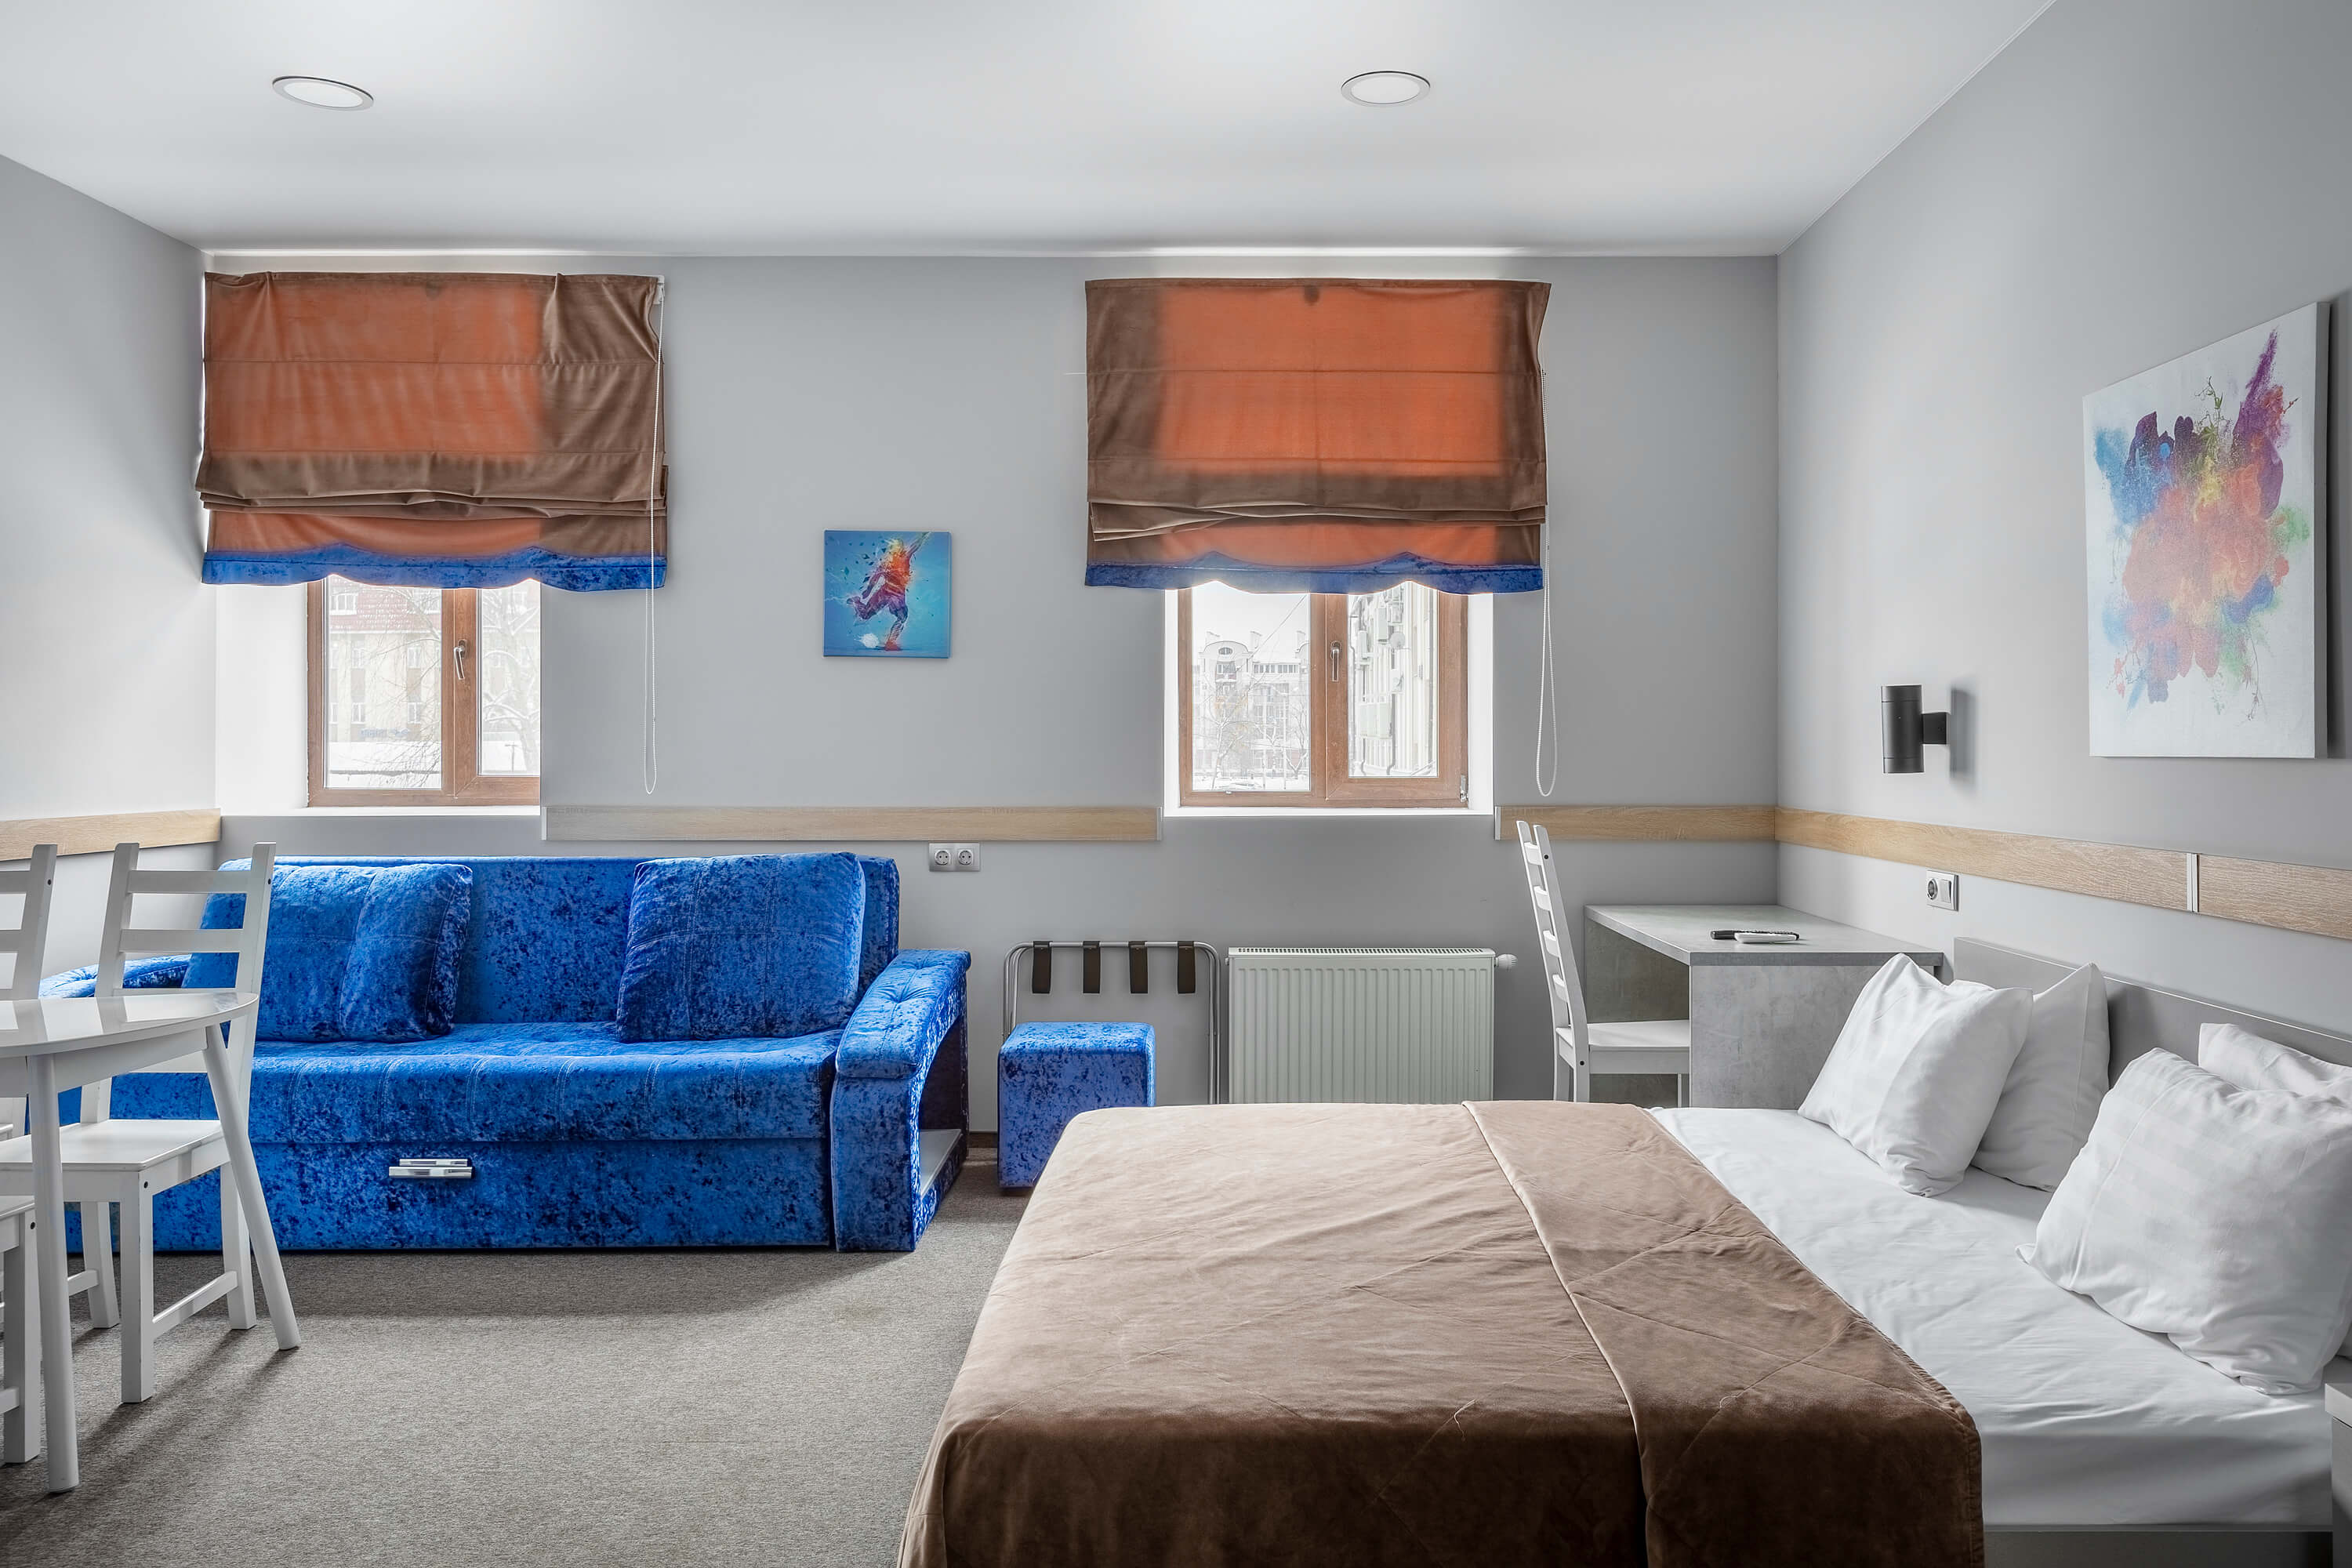 Комната: кровать, синий диван, два окна.